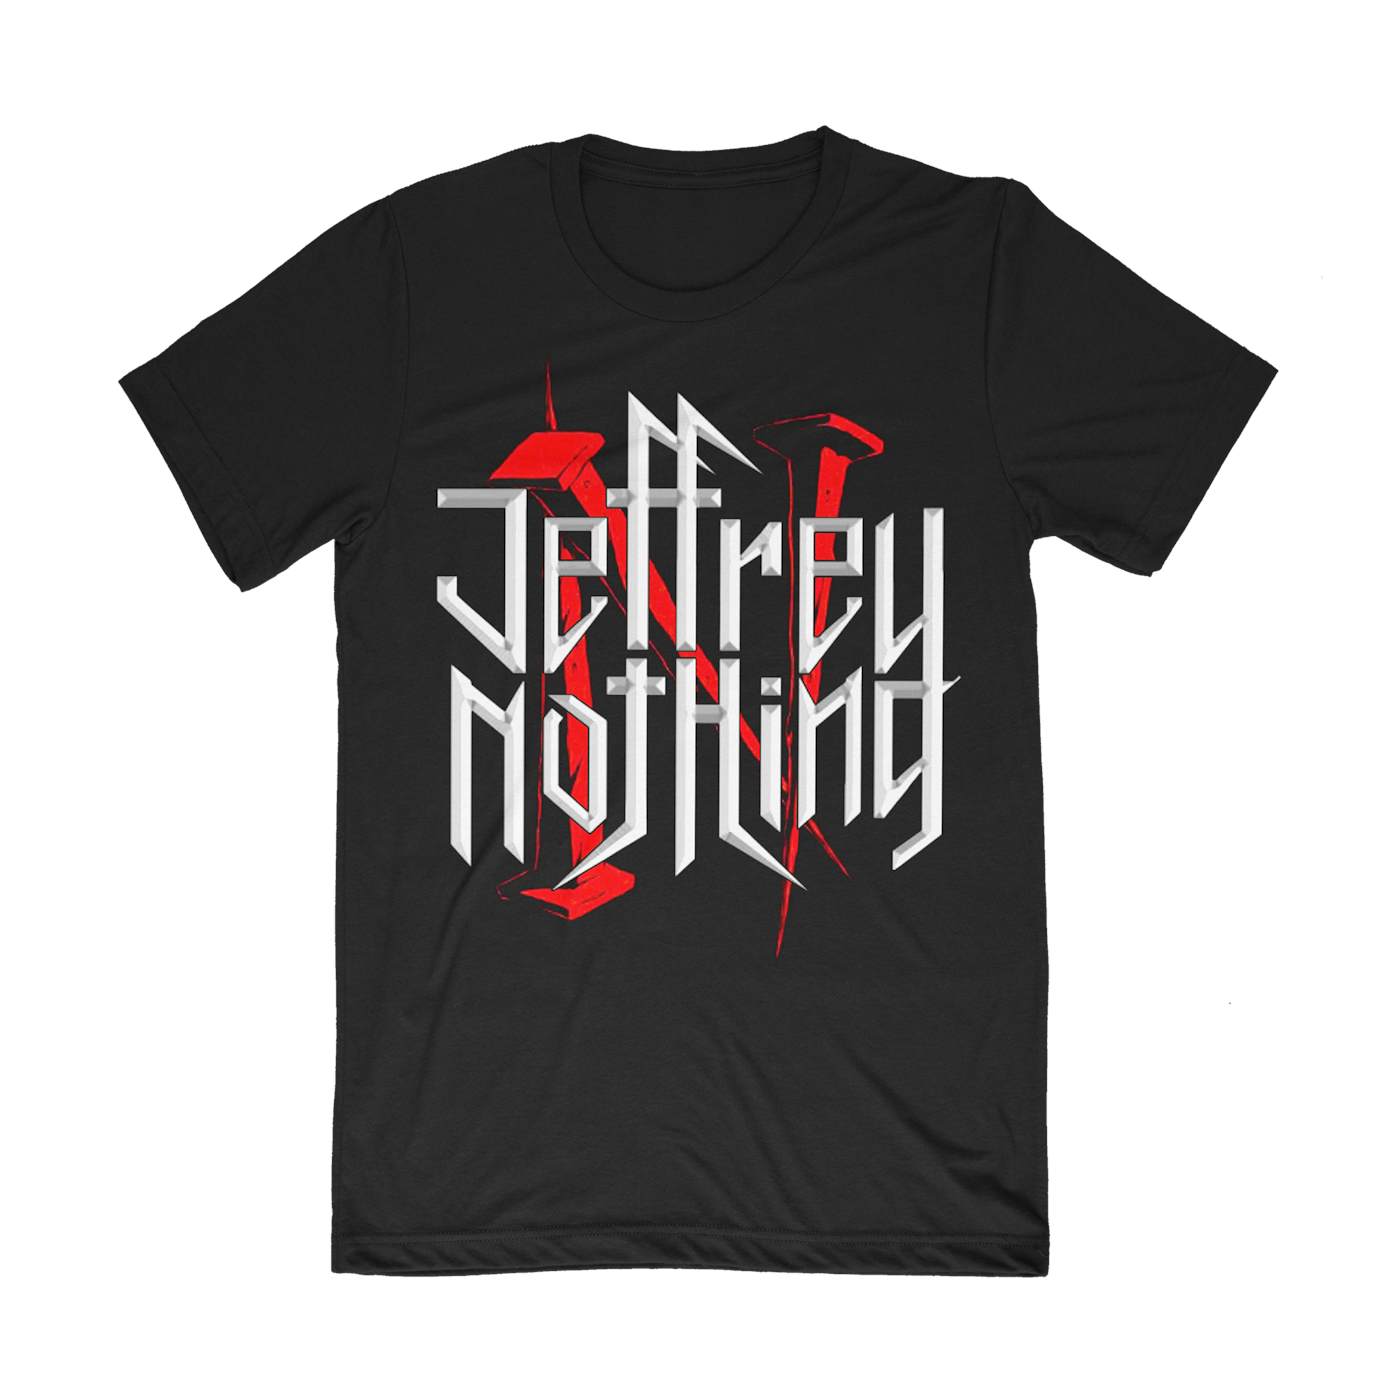 Jeffrey Nothing - Nails Shirt